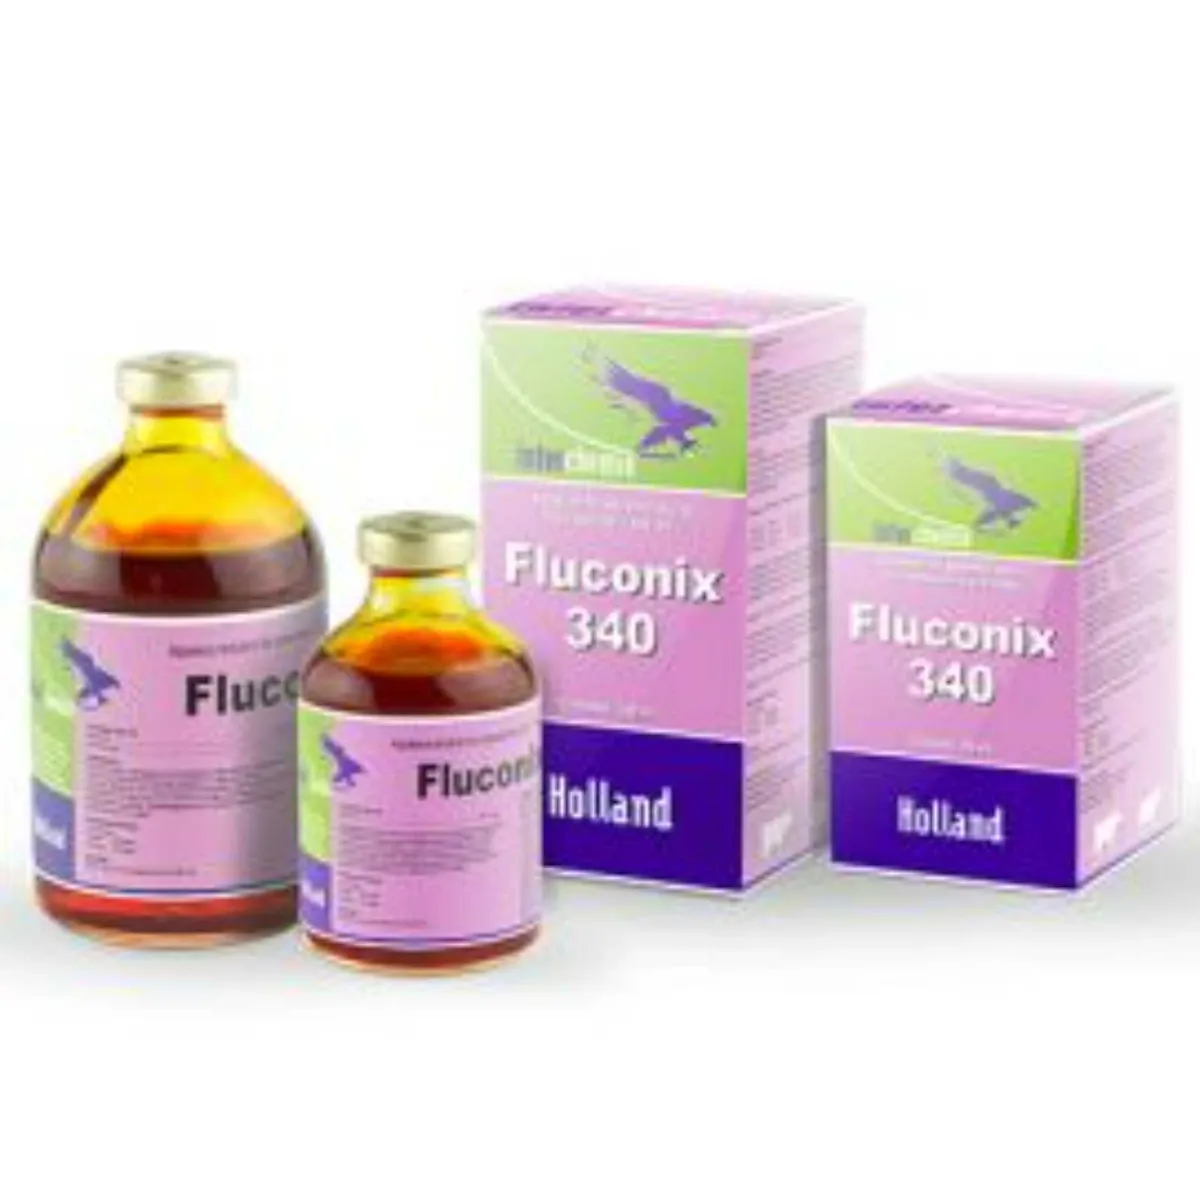 Fluconix-340 (Trodax Equivalant) (from)